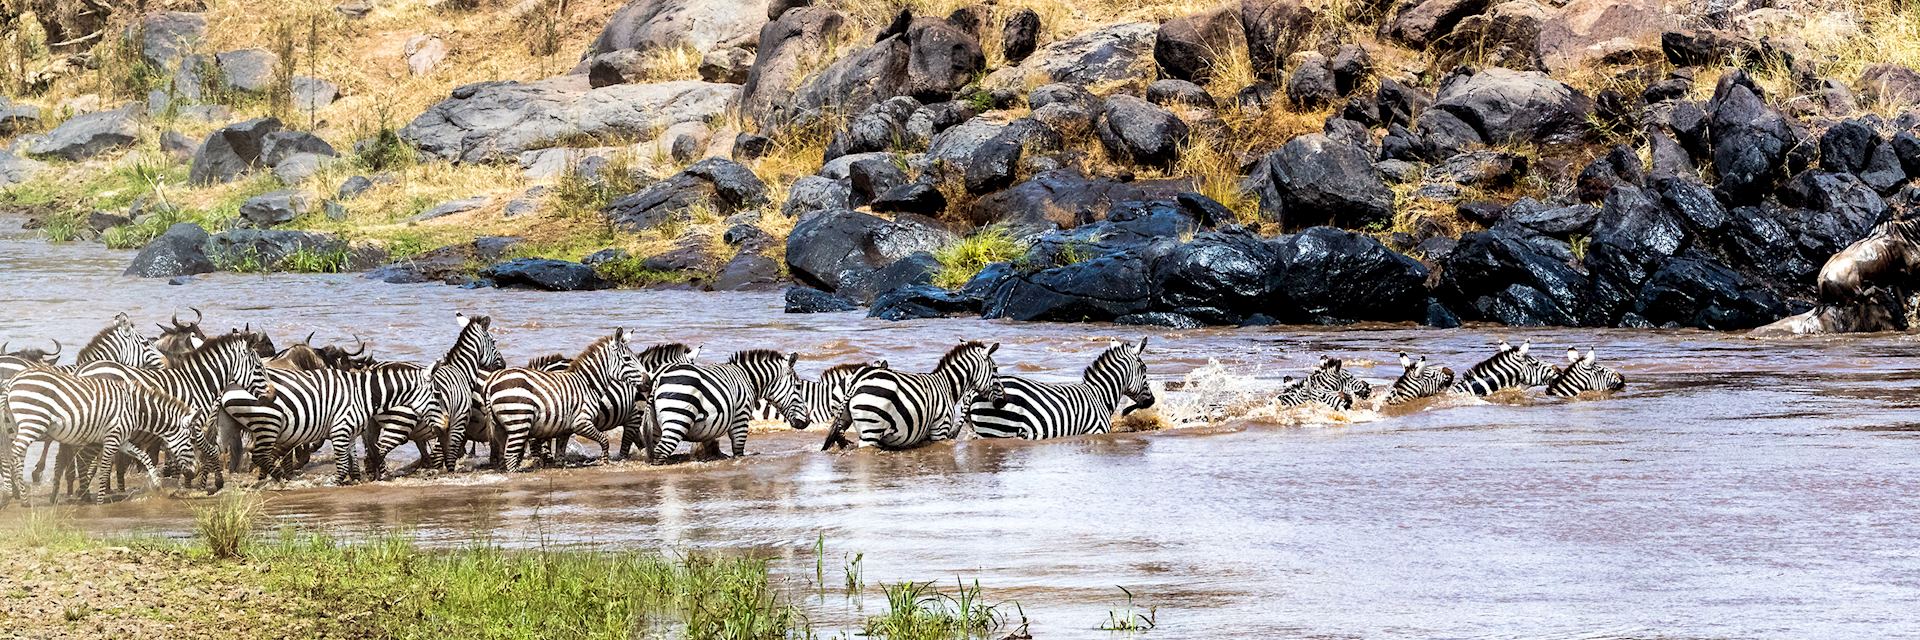 Zebra crossing the Mara River, Kenya